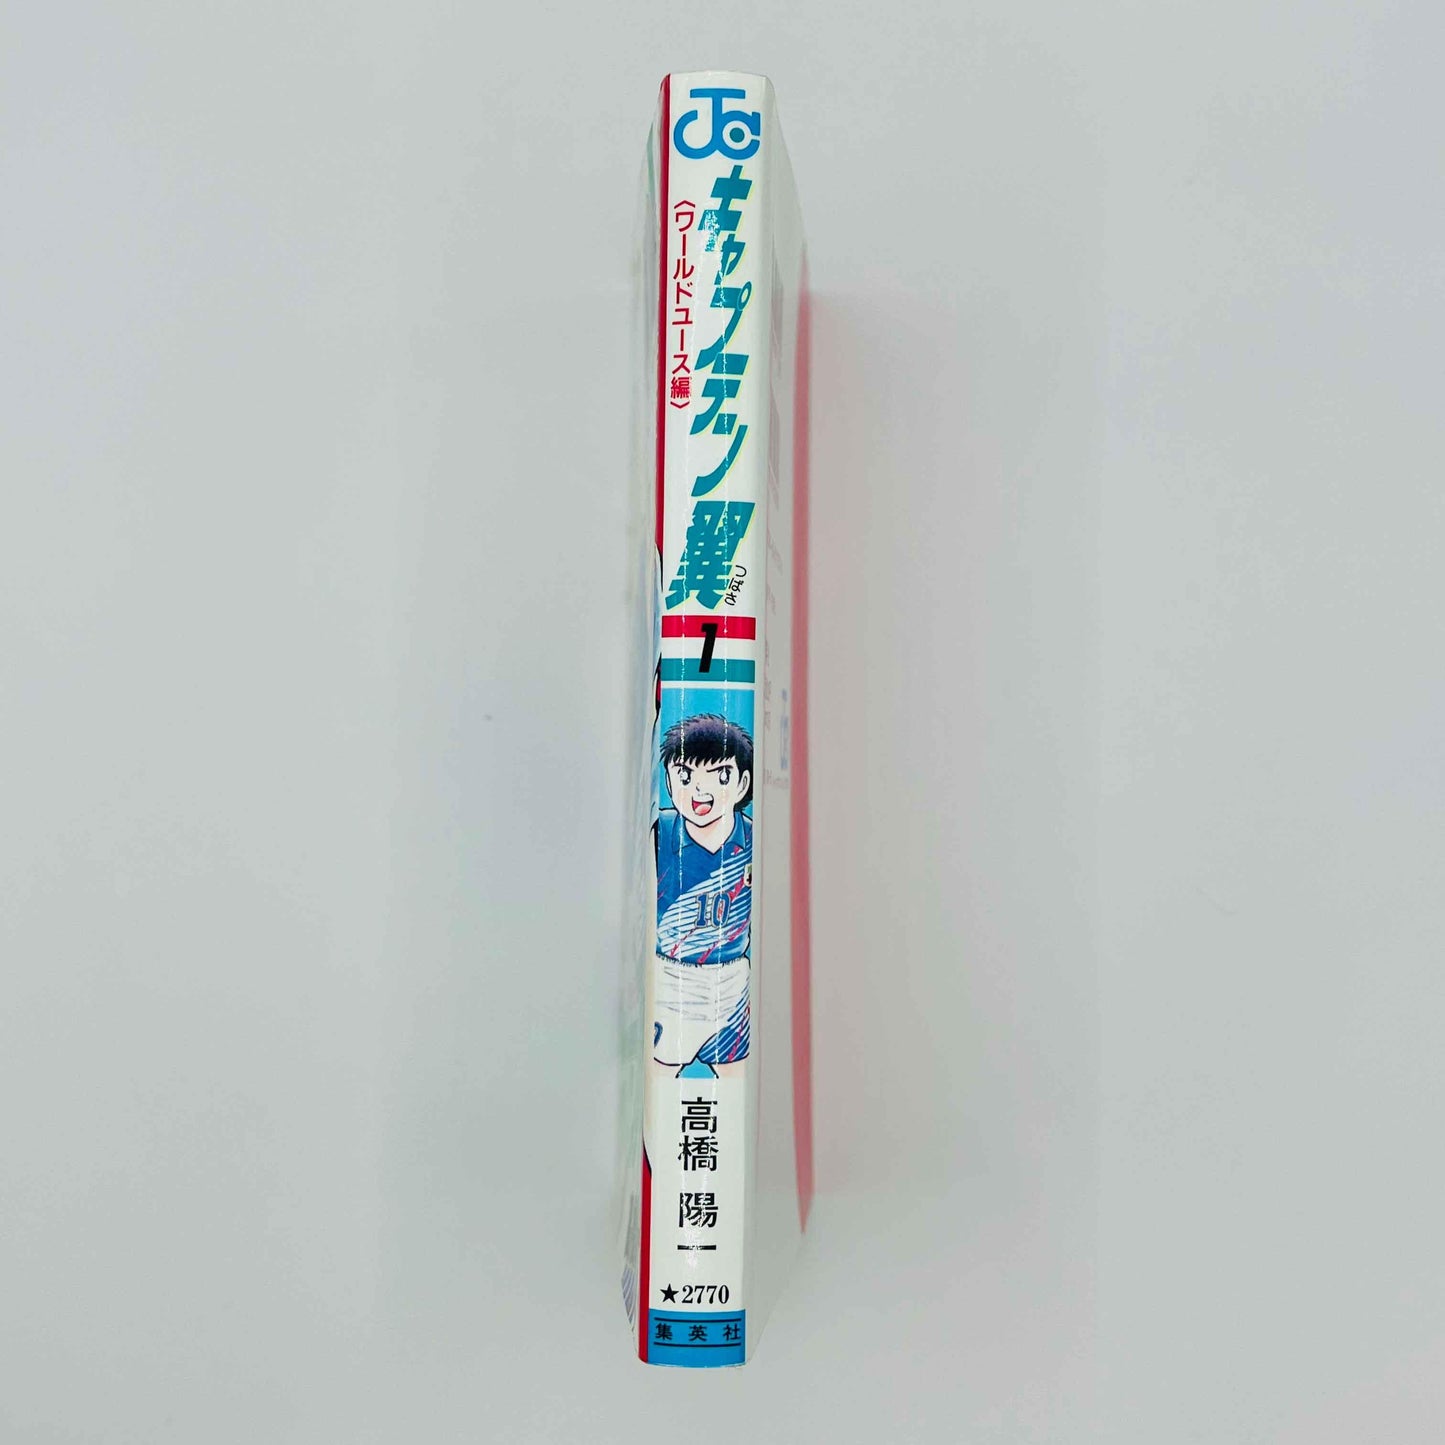 Captain Tsubasa J World Youth - Volume 01 - 1stPrint.net - 1st First Print Edition Manga Store - M-TSUJ-01-001